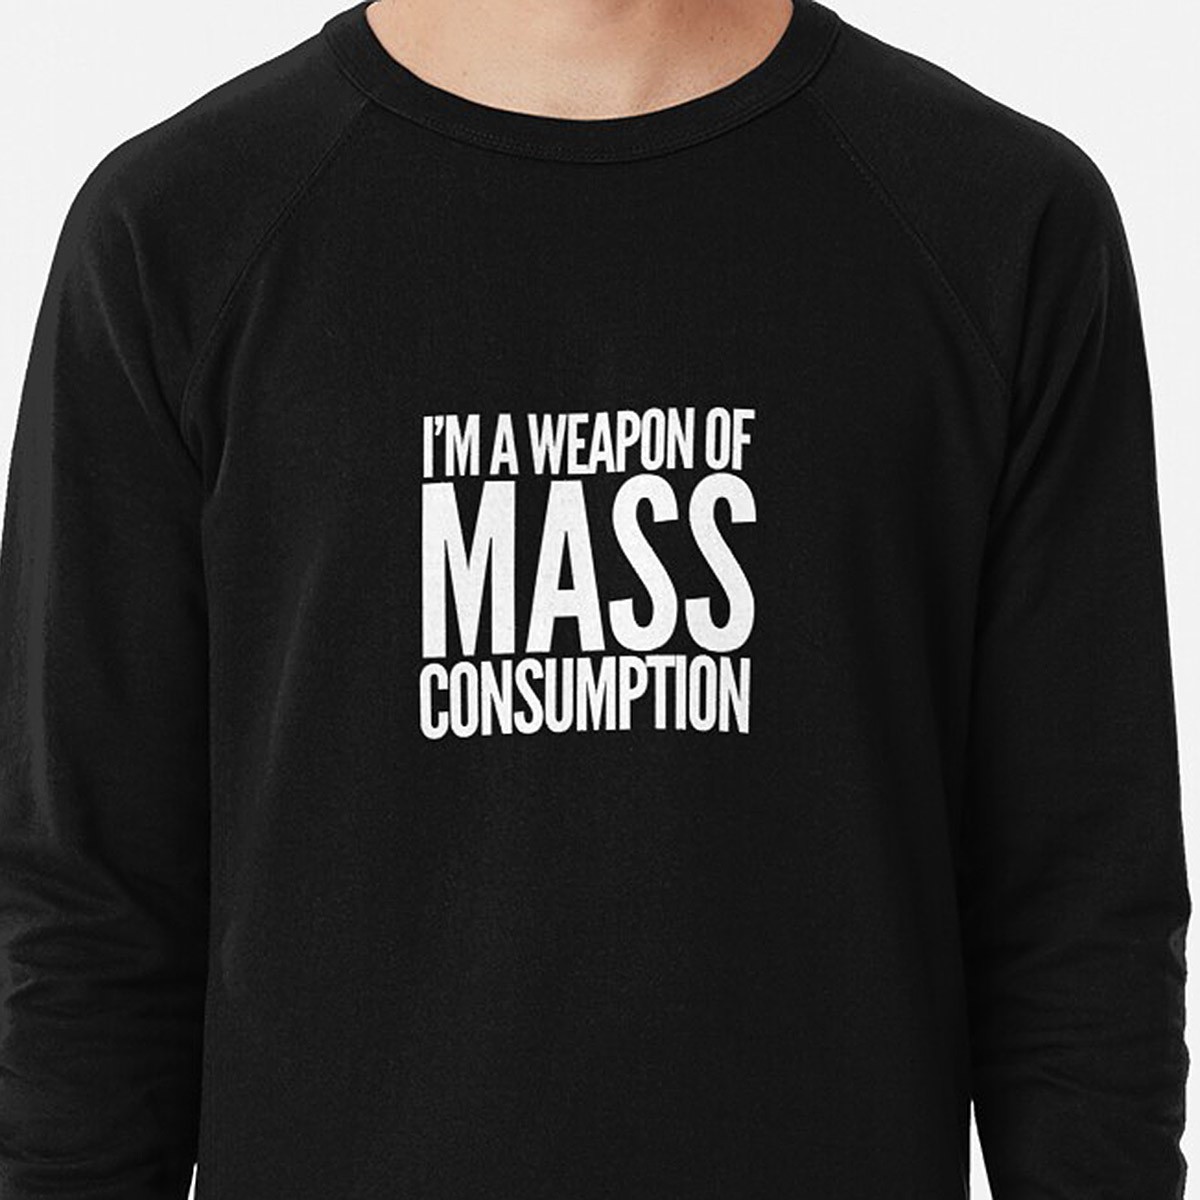 Weapon of Mass Consumption LIghtweight Sweatshirt by NTK Apparel